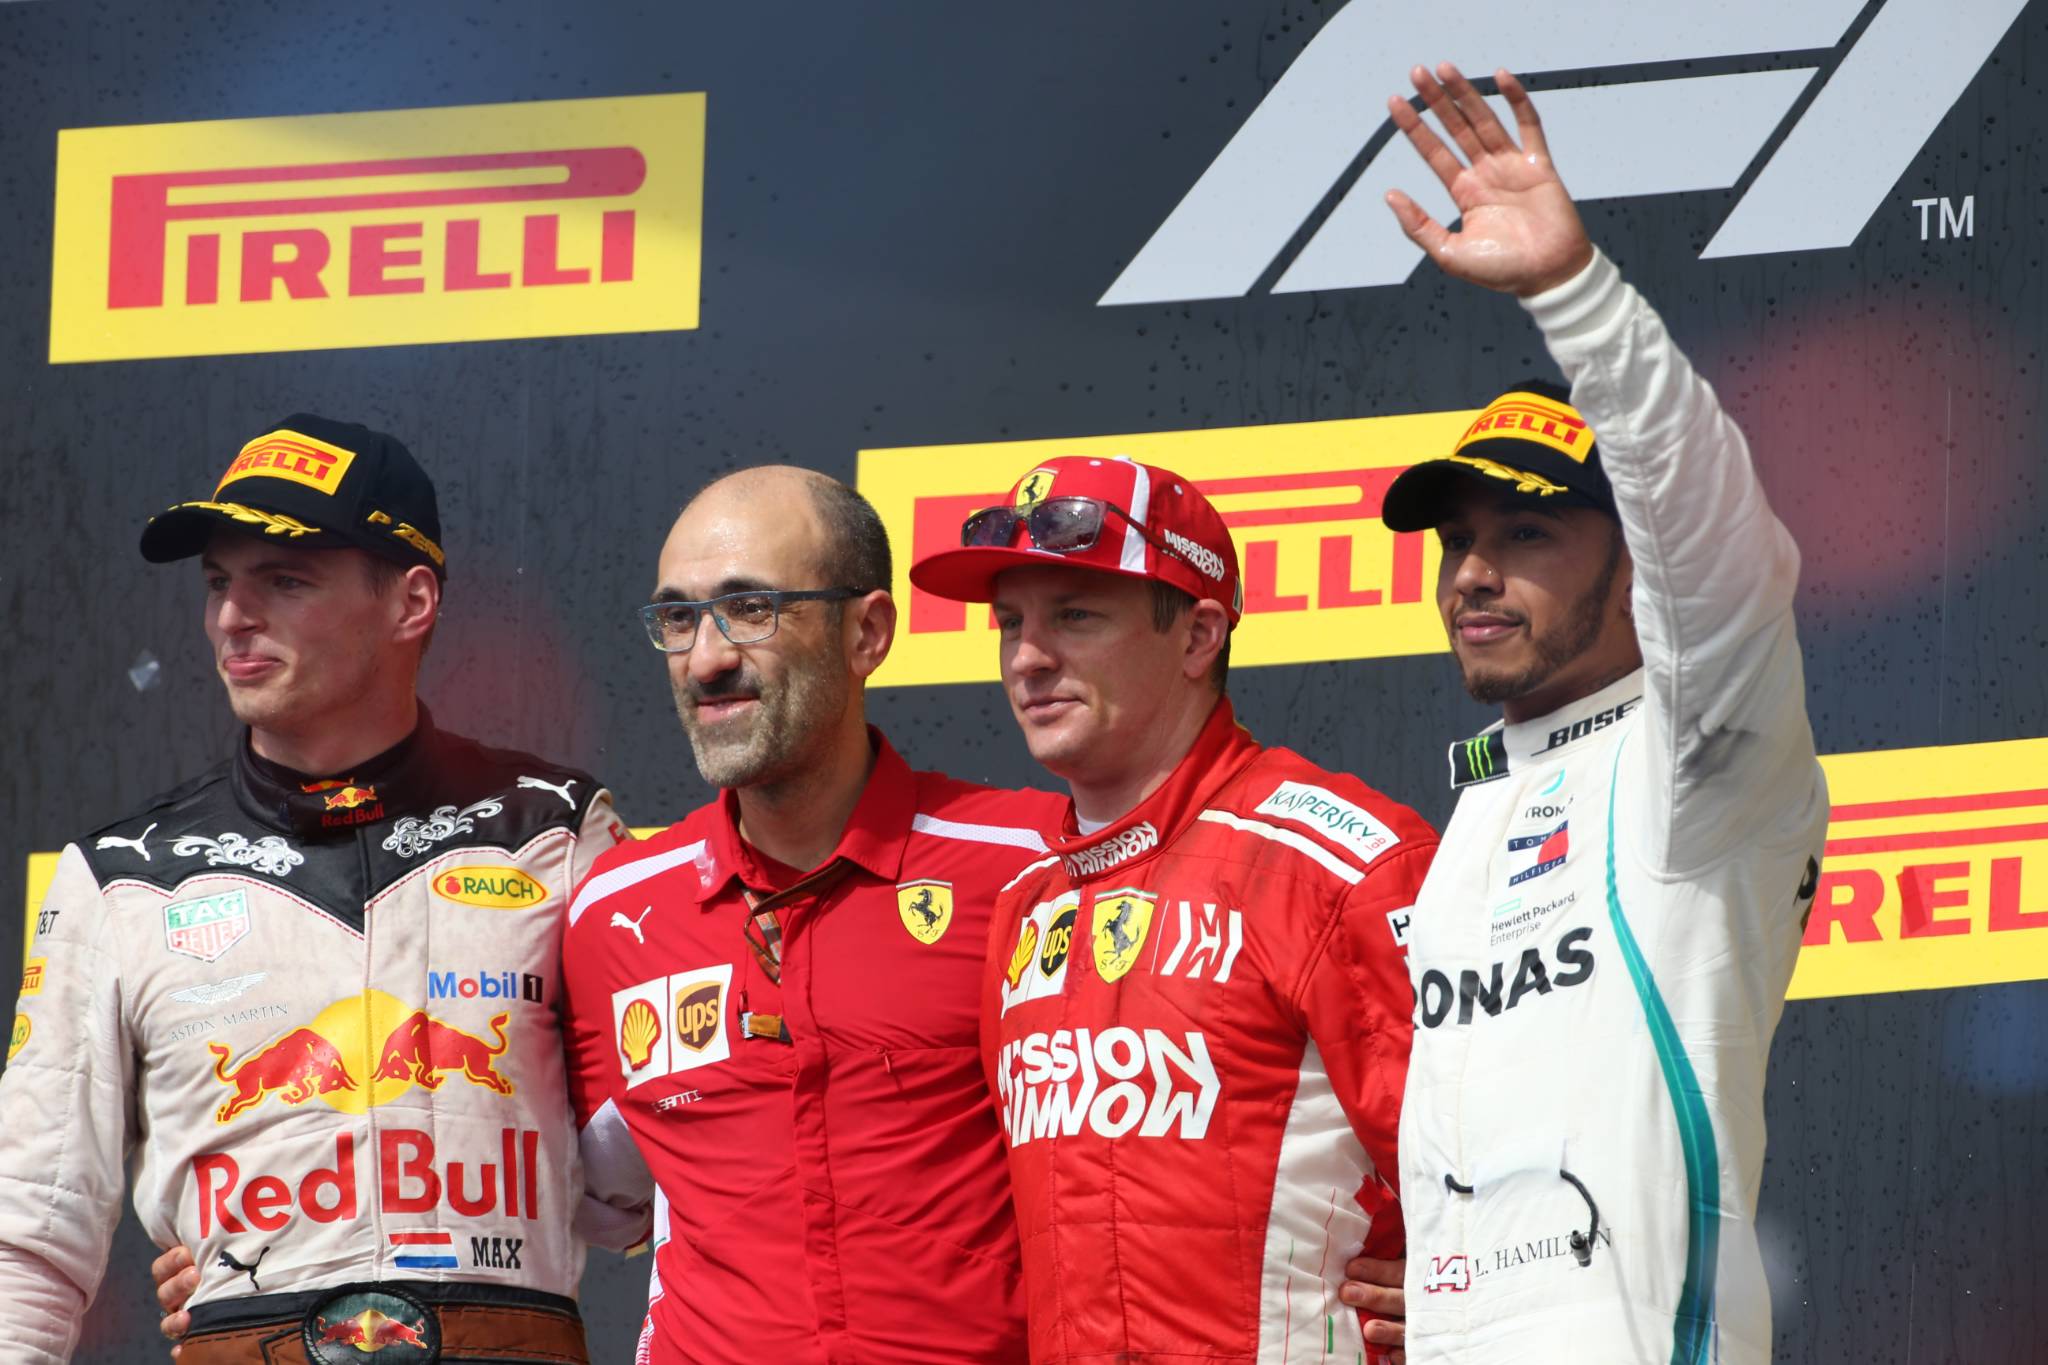 21.10.2018- podium, winner Kimi Raikkonen (FIN) Scuderia Ferrari SF71H, 2nd place Max Verstappen (NED) Red Bull Racing RB14 and 3rd place Lewis Hamilton (GBR) Mercedes AMG F1 W09 